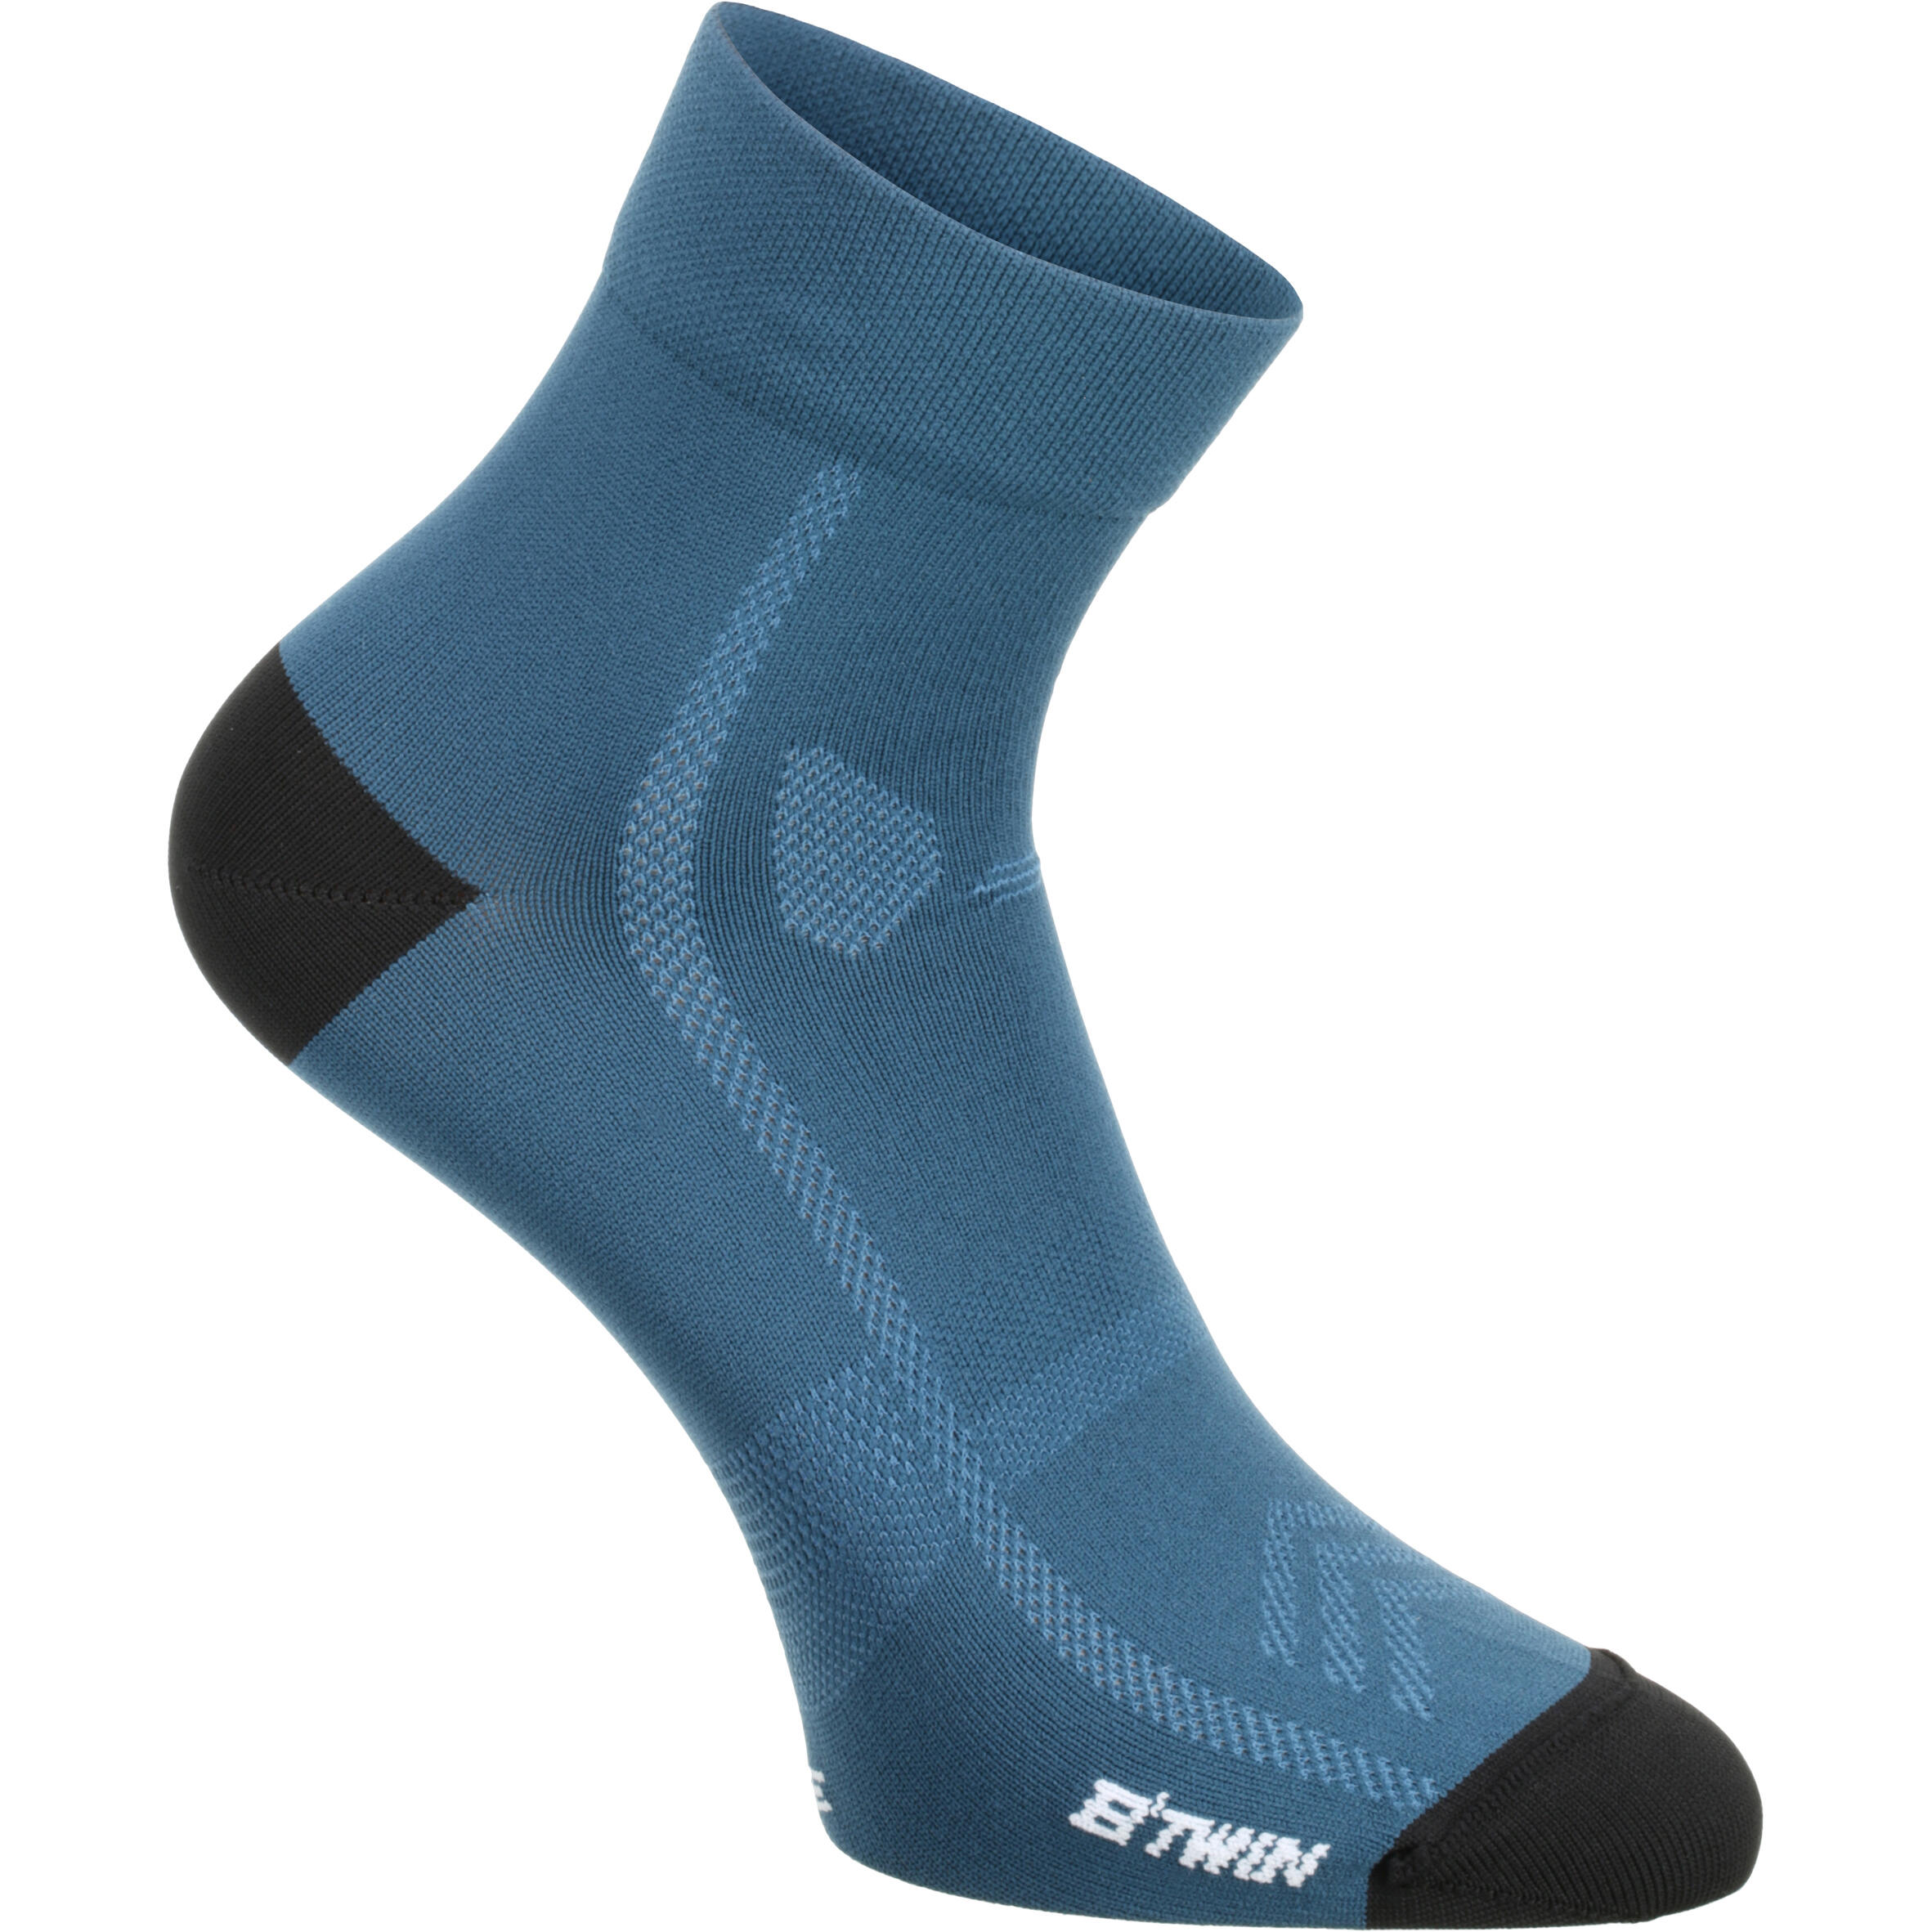 VAN RYSEL 500 Cycling Socks - Dark Blue